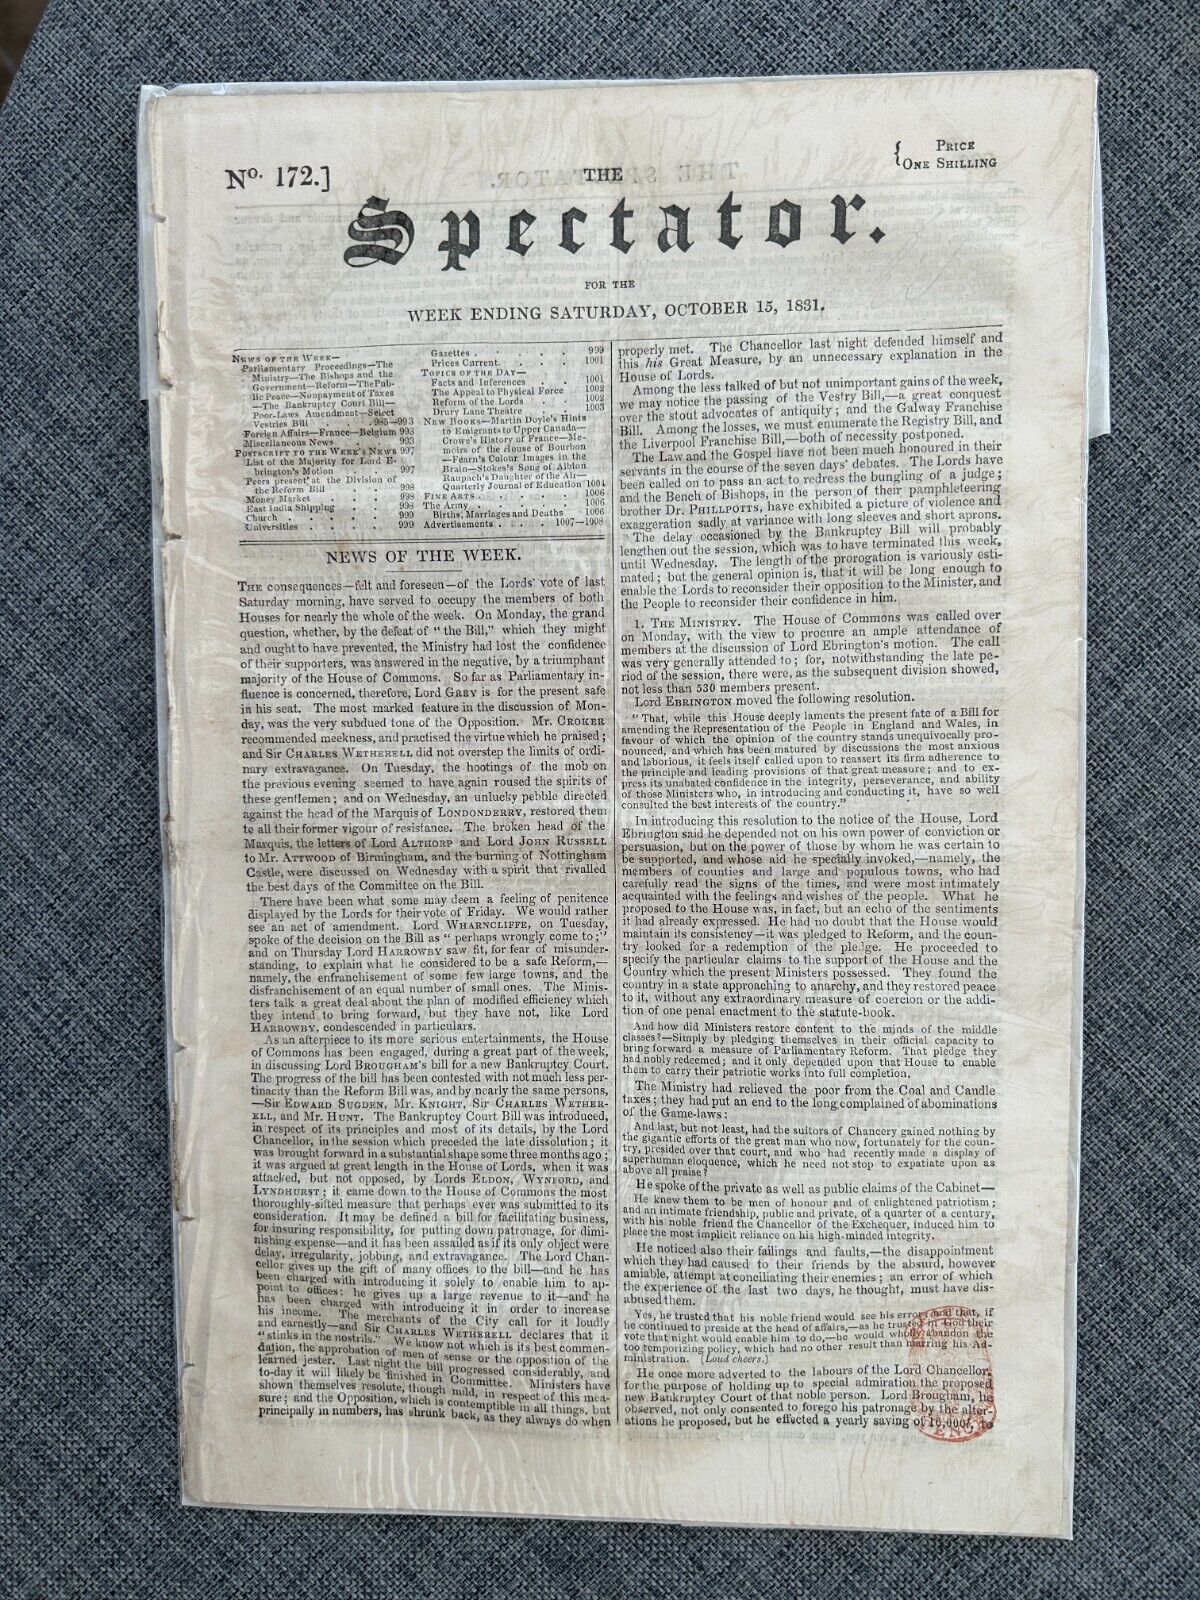 THE SPECTATOR 15 OCT 1831 STEAM BOAT CRASH HURRICANE BARBADOS ORIGINAL NEWSPAPER